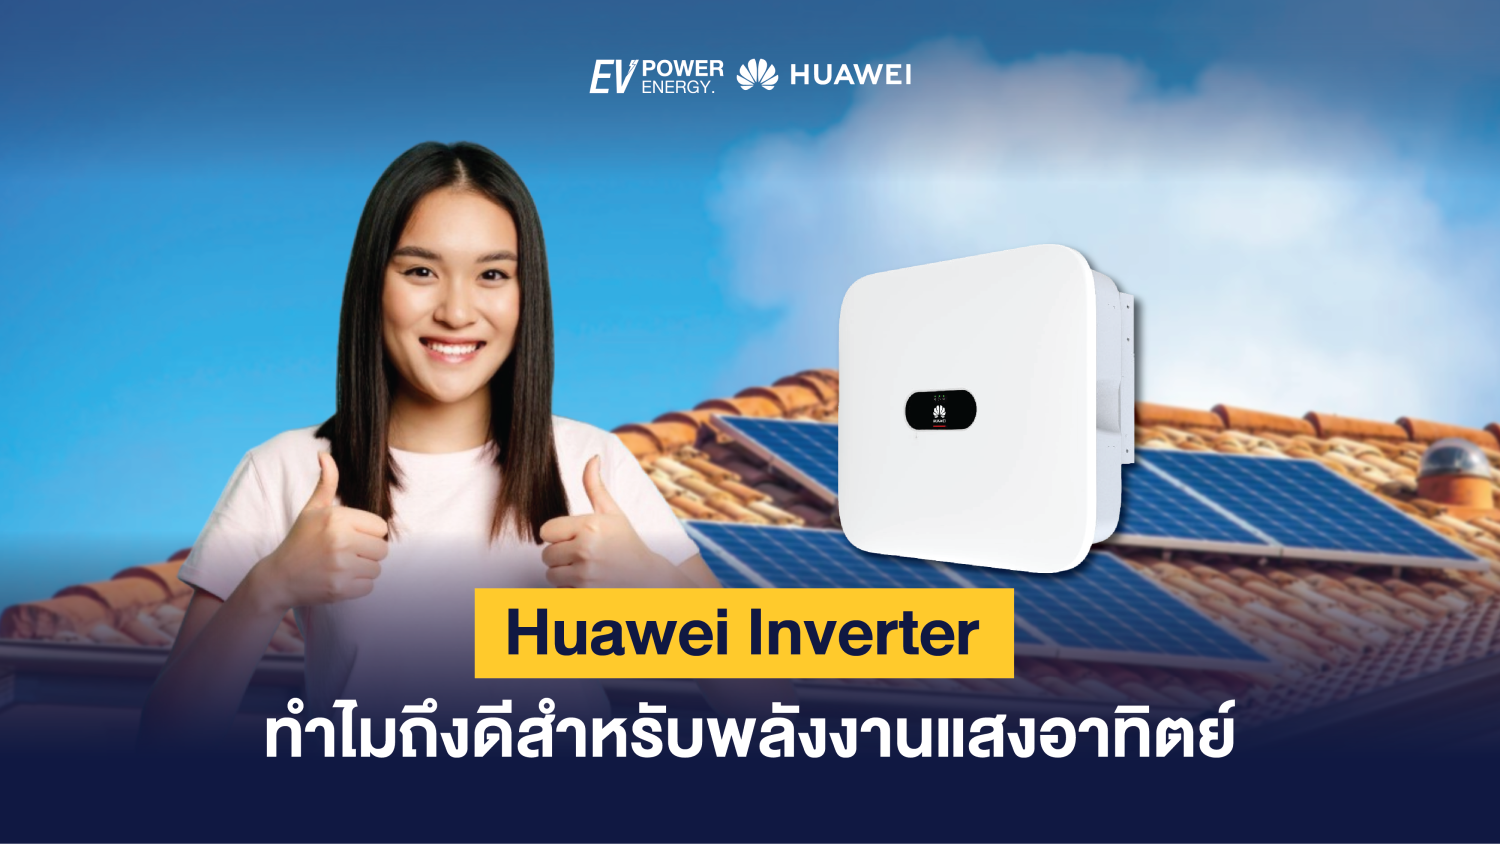 Huawei Inverter ทำไมถึงดีสำหรับพลังงานแสงอาทิตย์-01 1